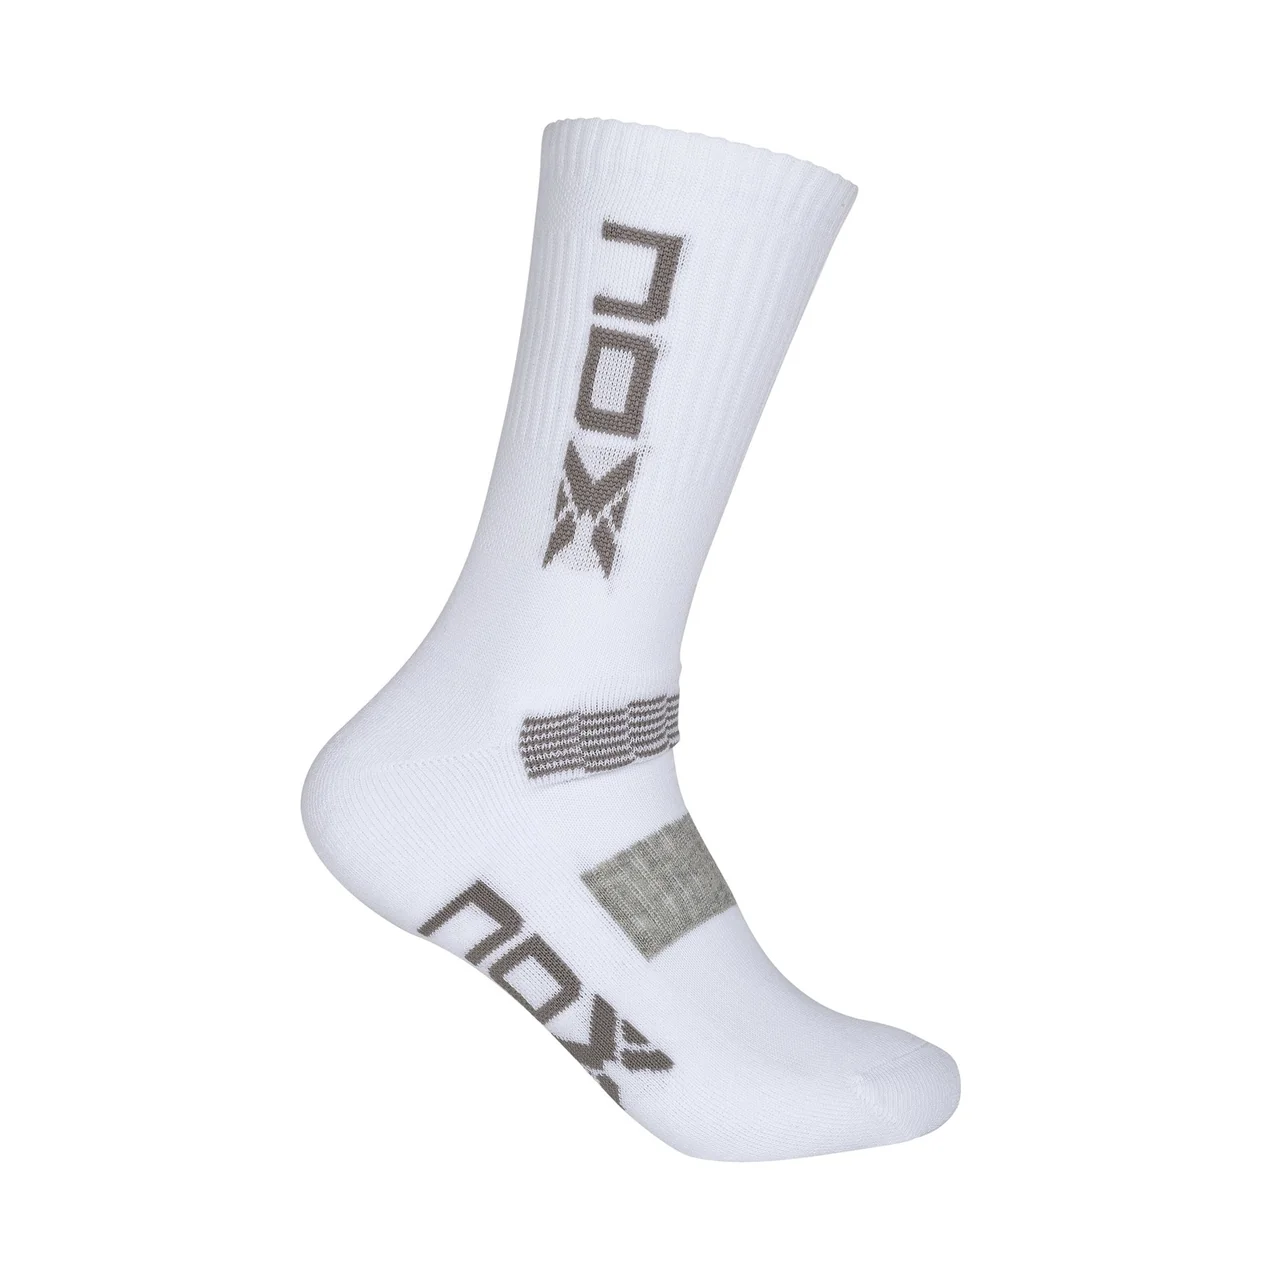 Nox Technical Socks 1pk White/Grey